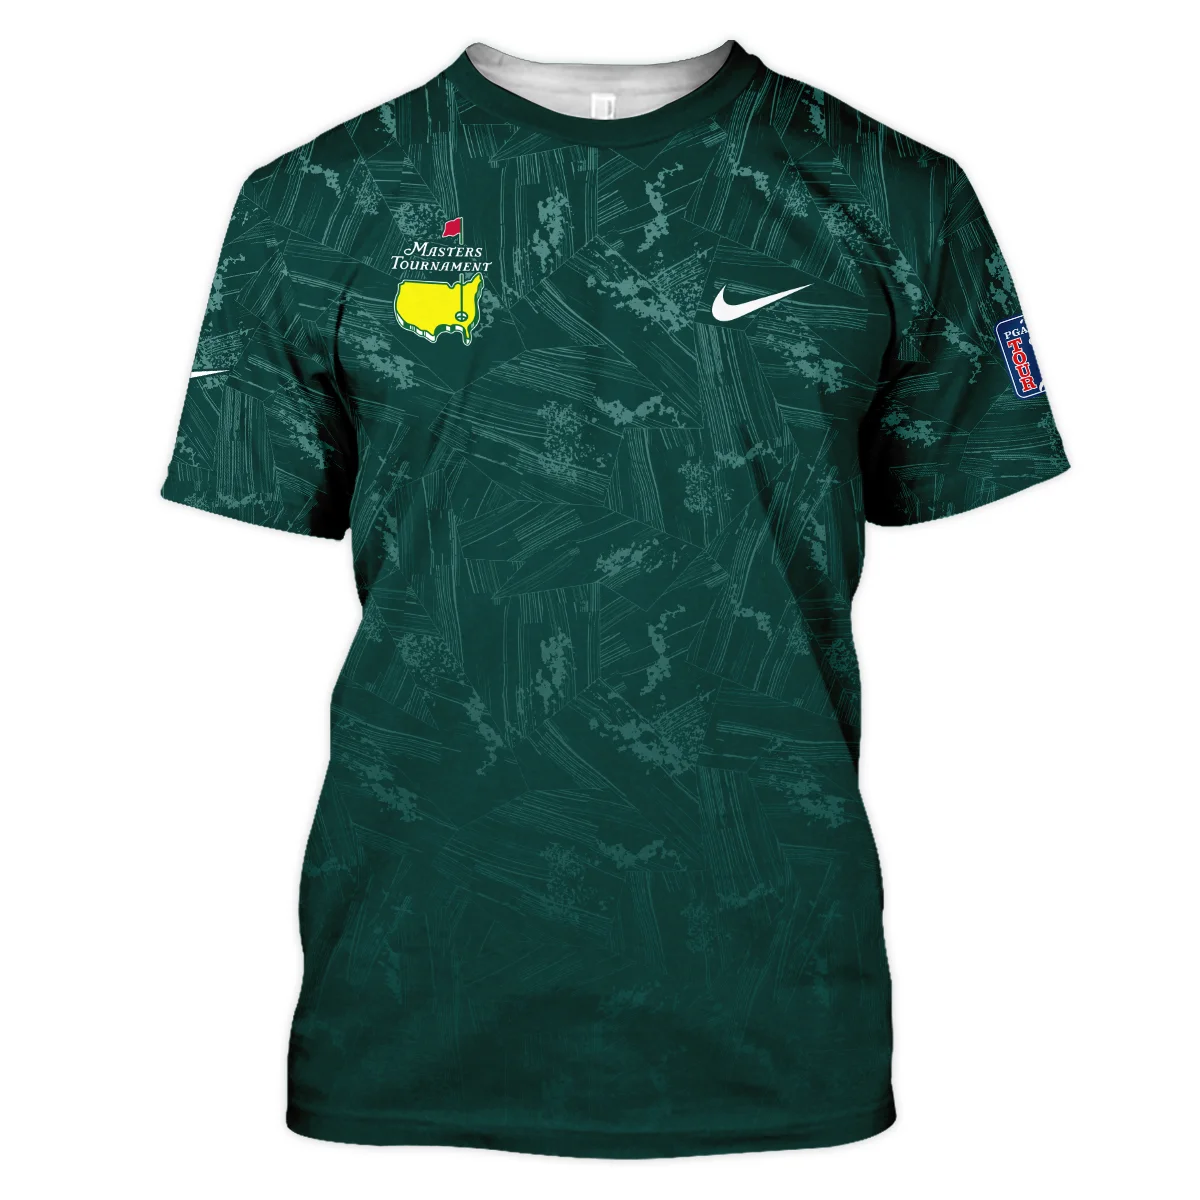 Dark Green Background Masters Tournament Nike Unisex T-Shirt Style Classic T-Shirt